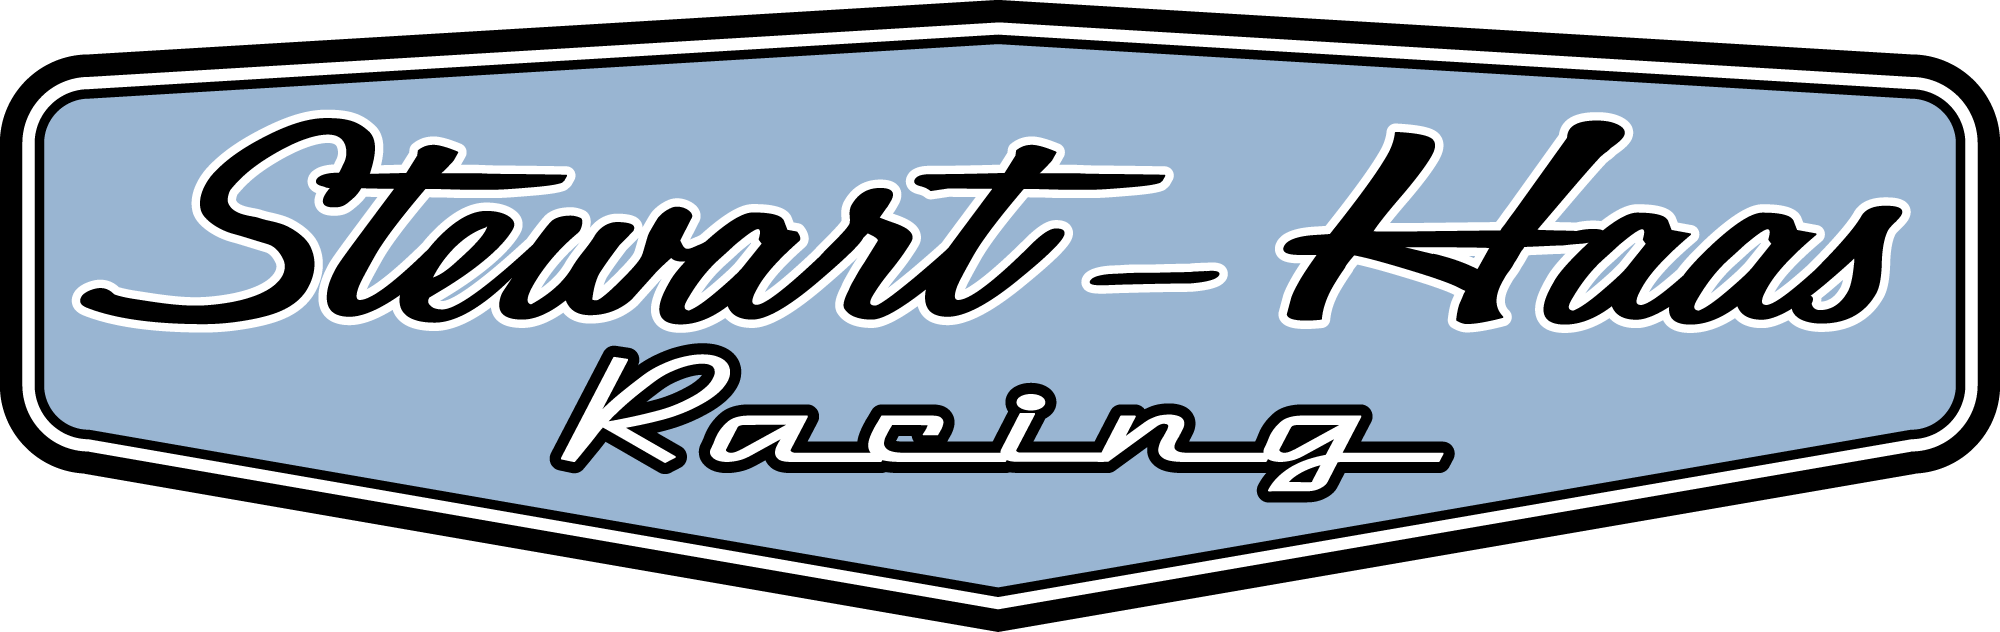 Stewart Haas Racing logo